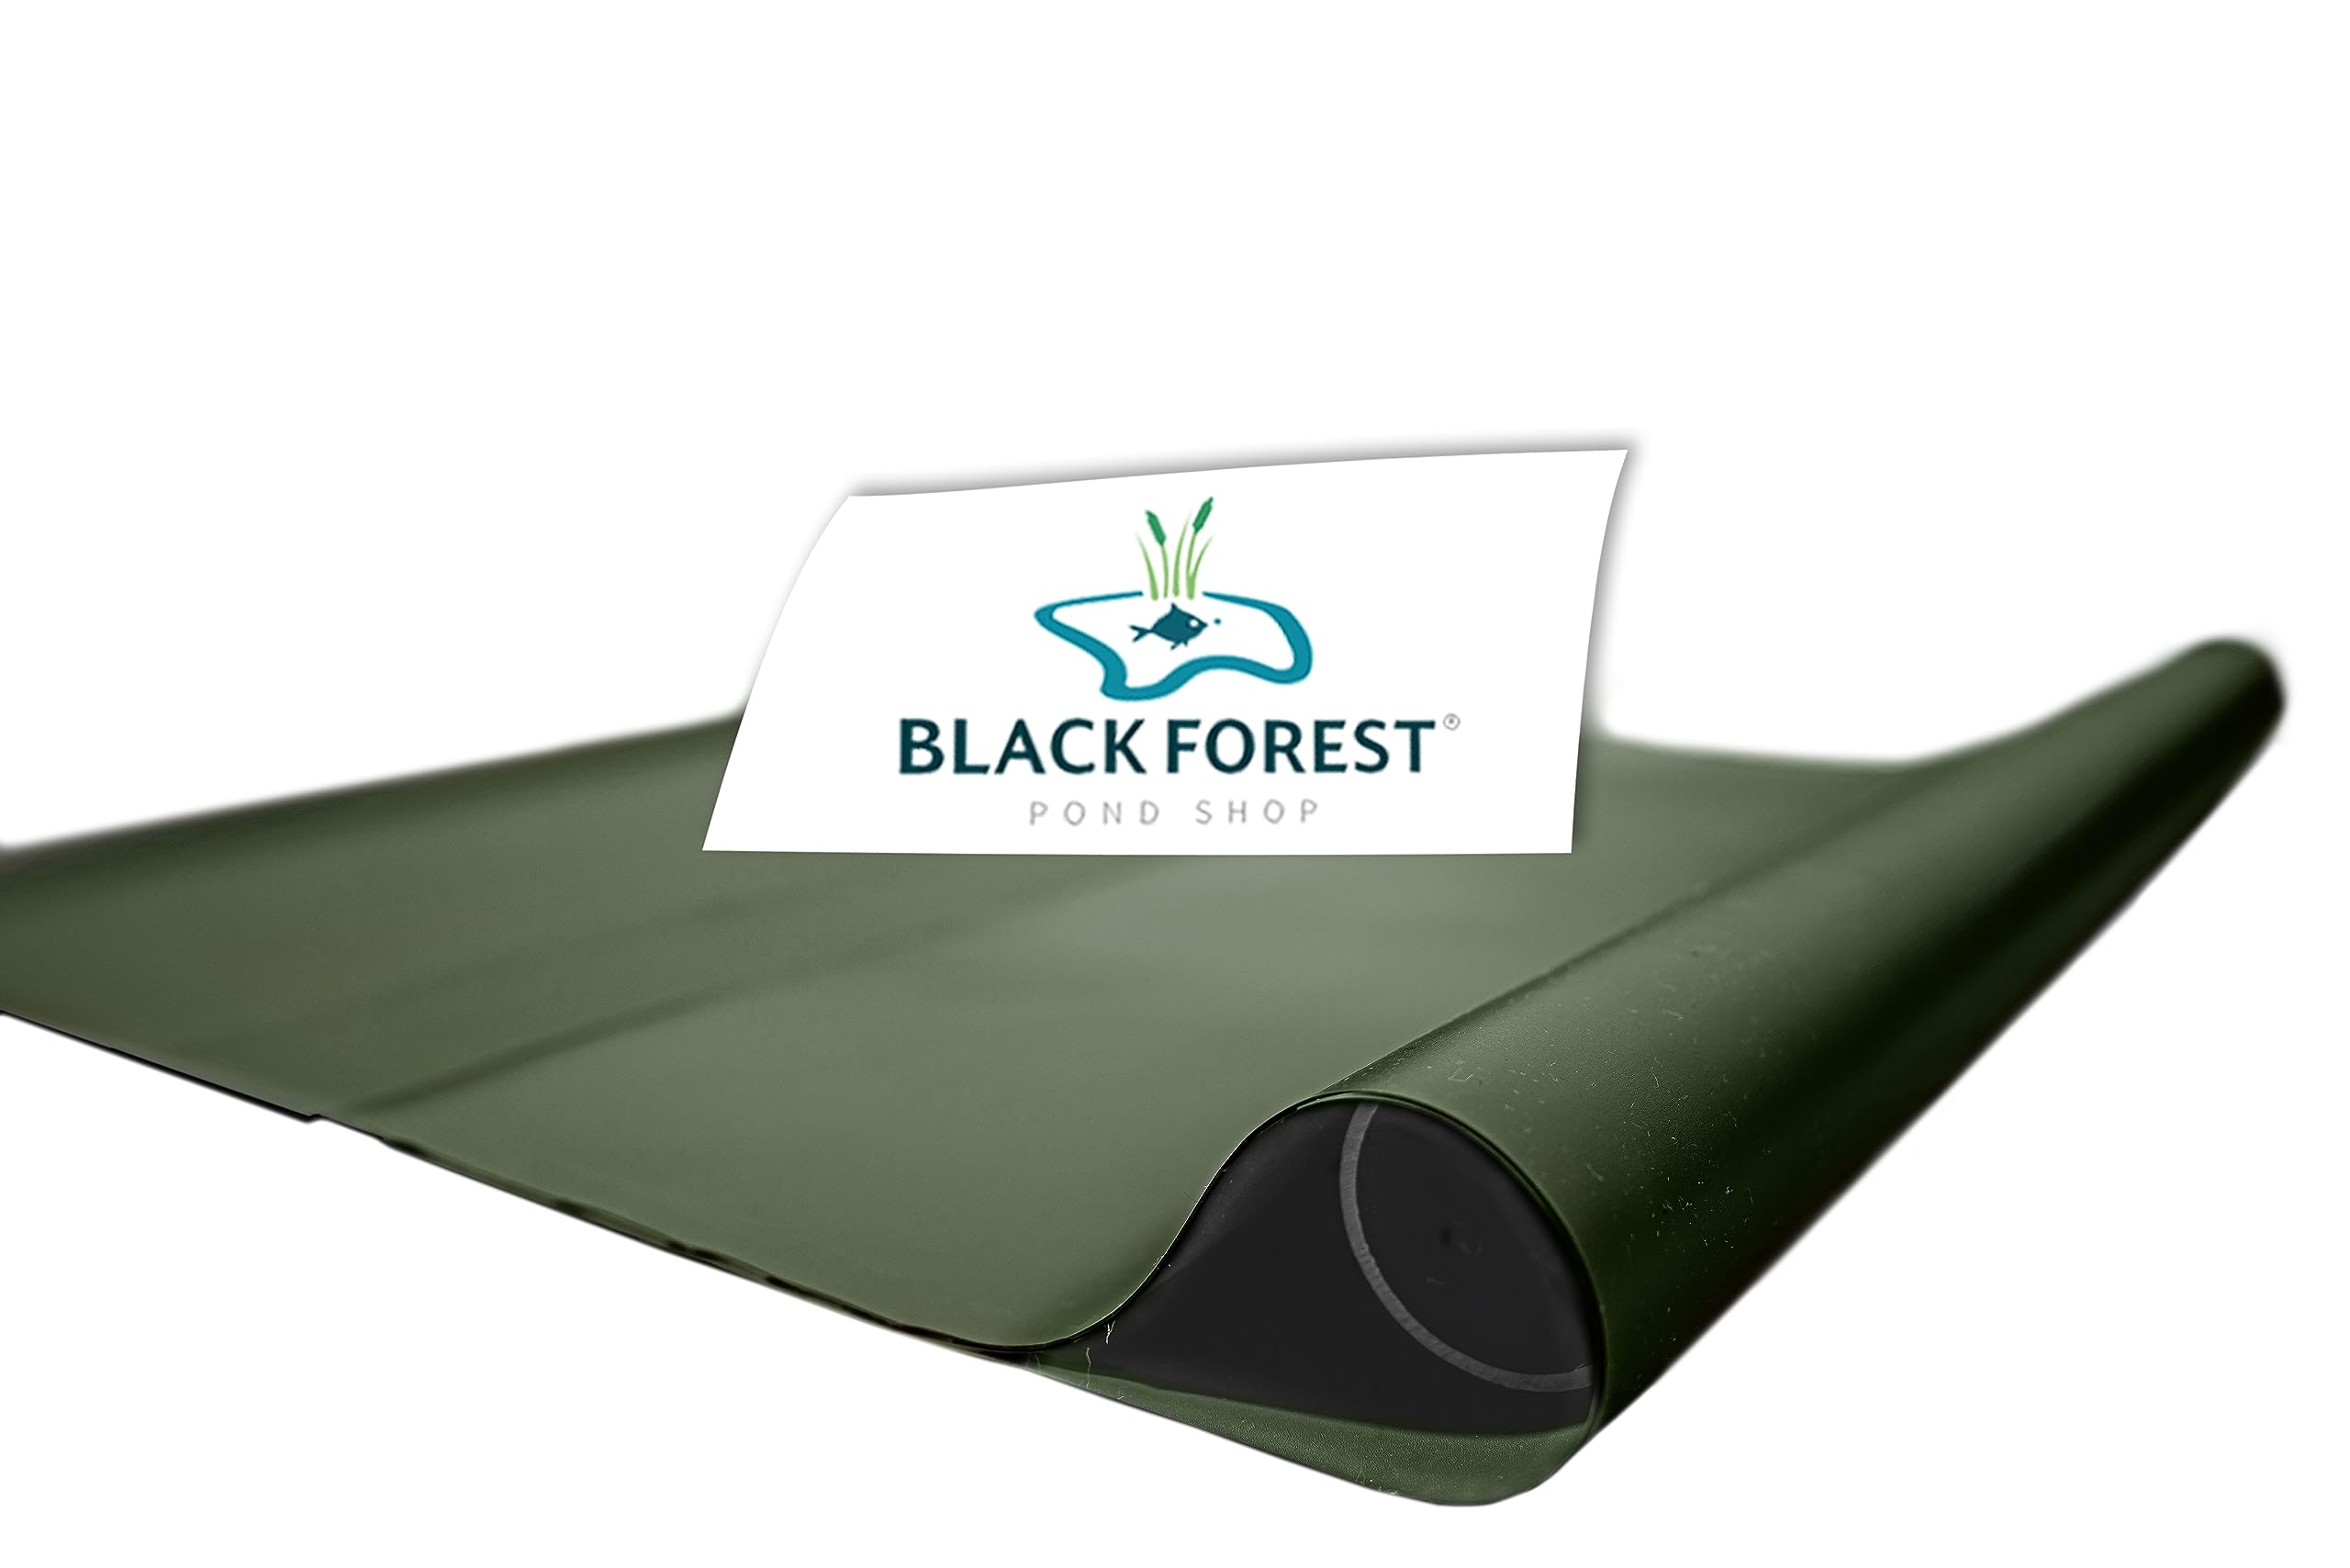 Black Forest Pond Shop Teichfolie olivgrün 4 x 4 m - Made in Germany - Stärke 1 mm -Premium DIY PVC grün 1mm, Maß 4x4m